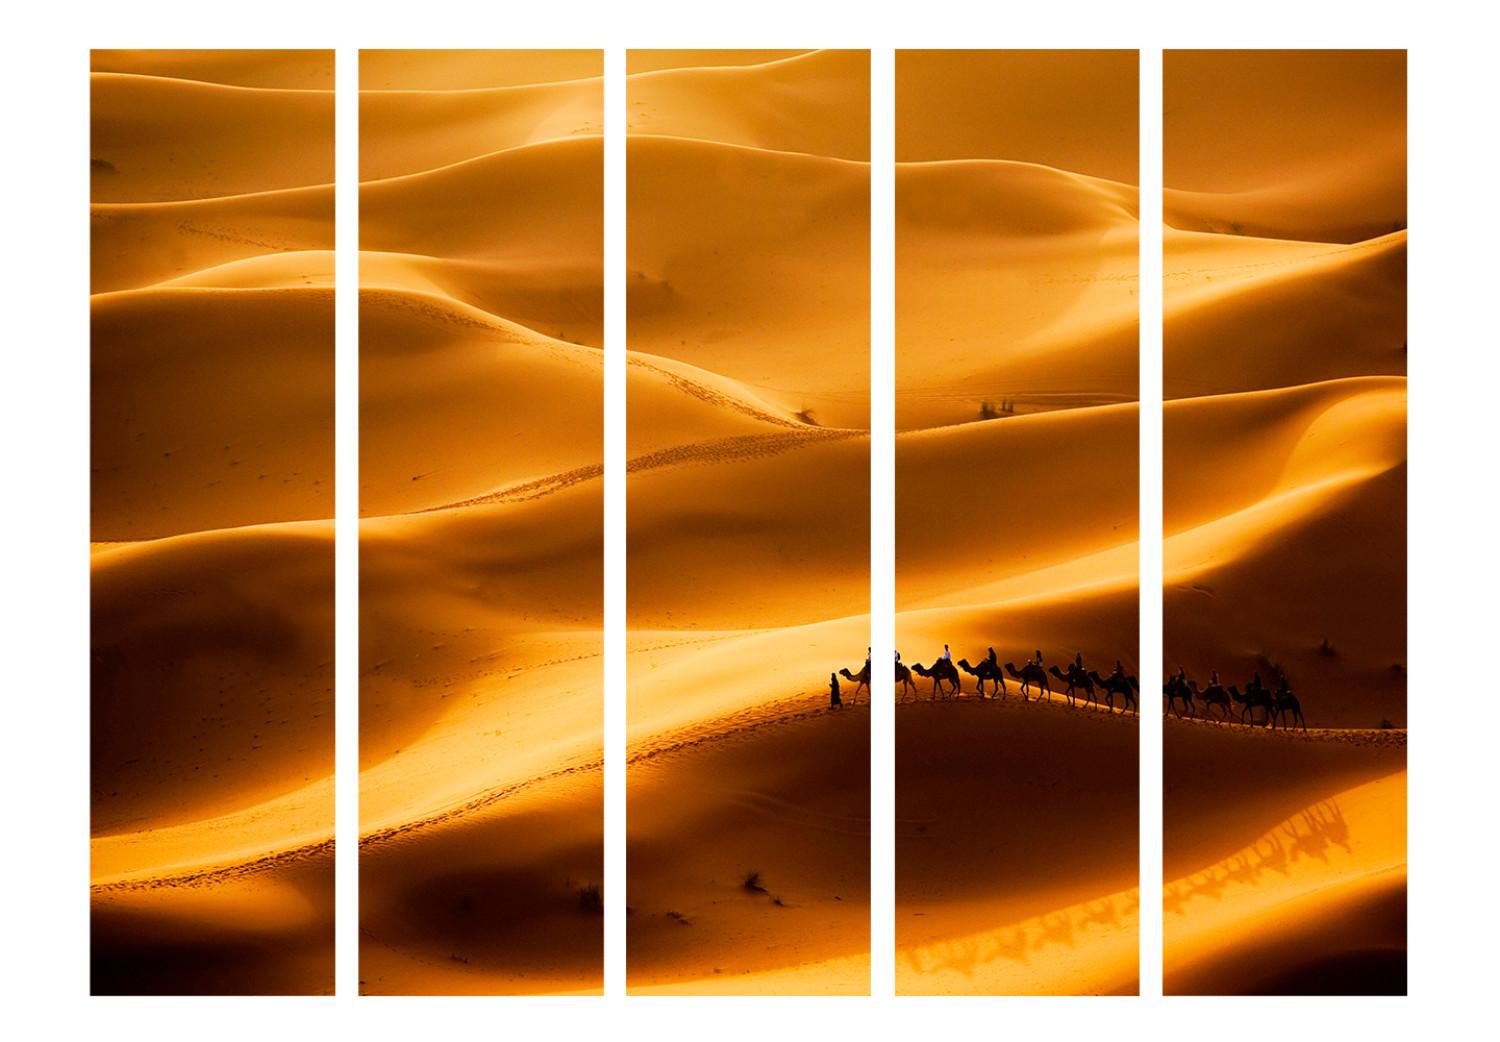 Biombo decorativo Caravana de camellos II (5 partes) - paisaje desértico cálido